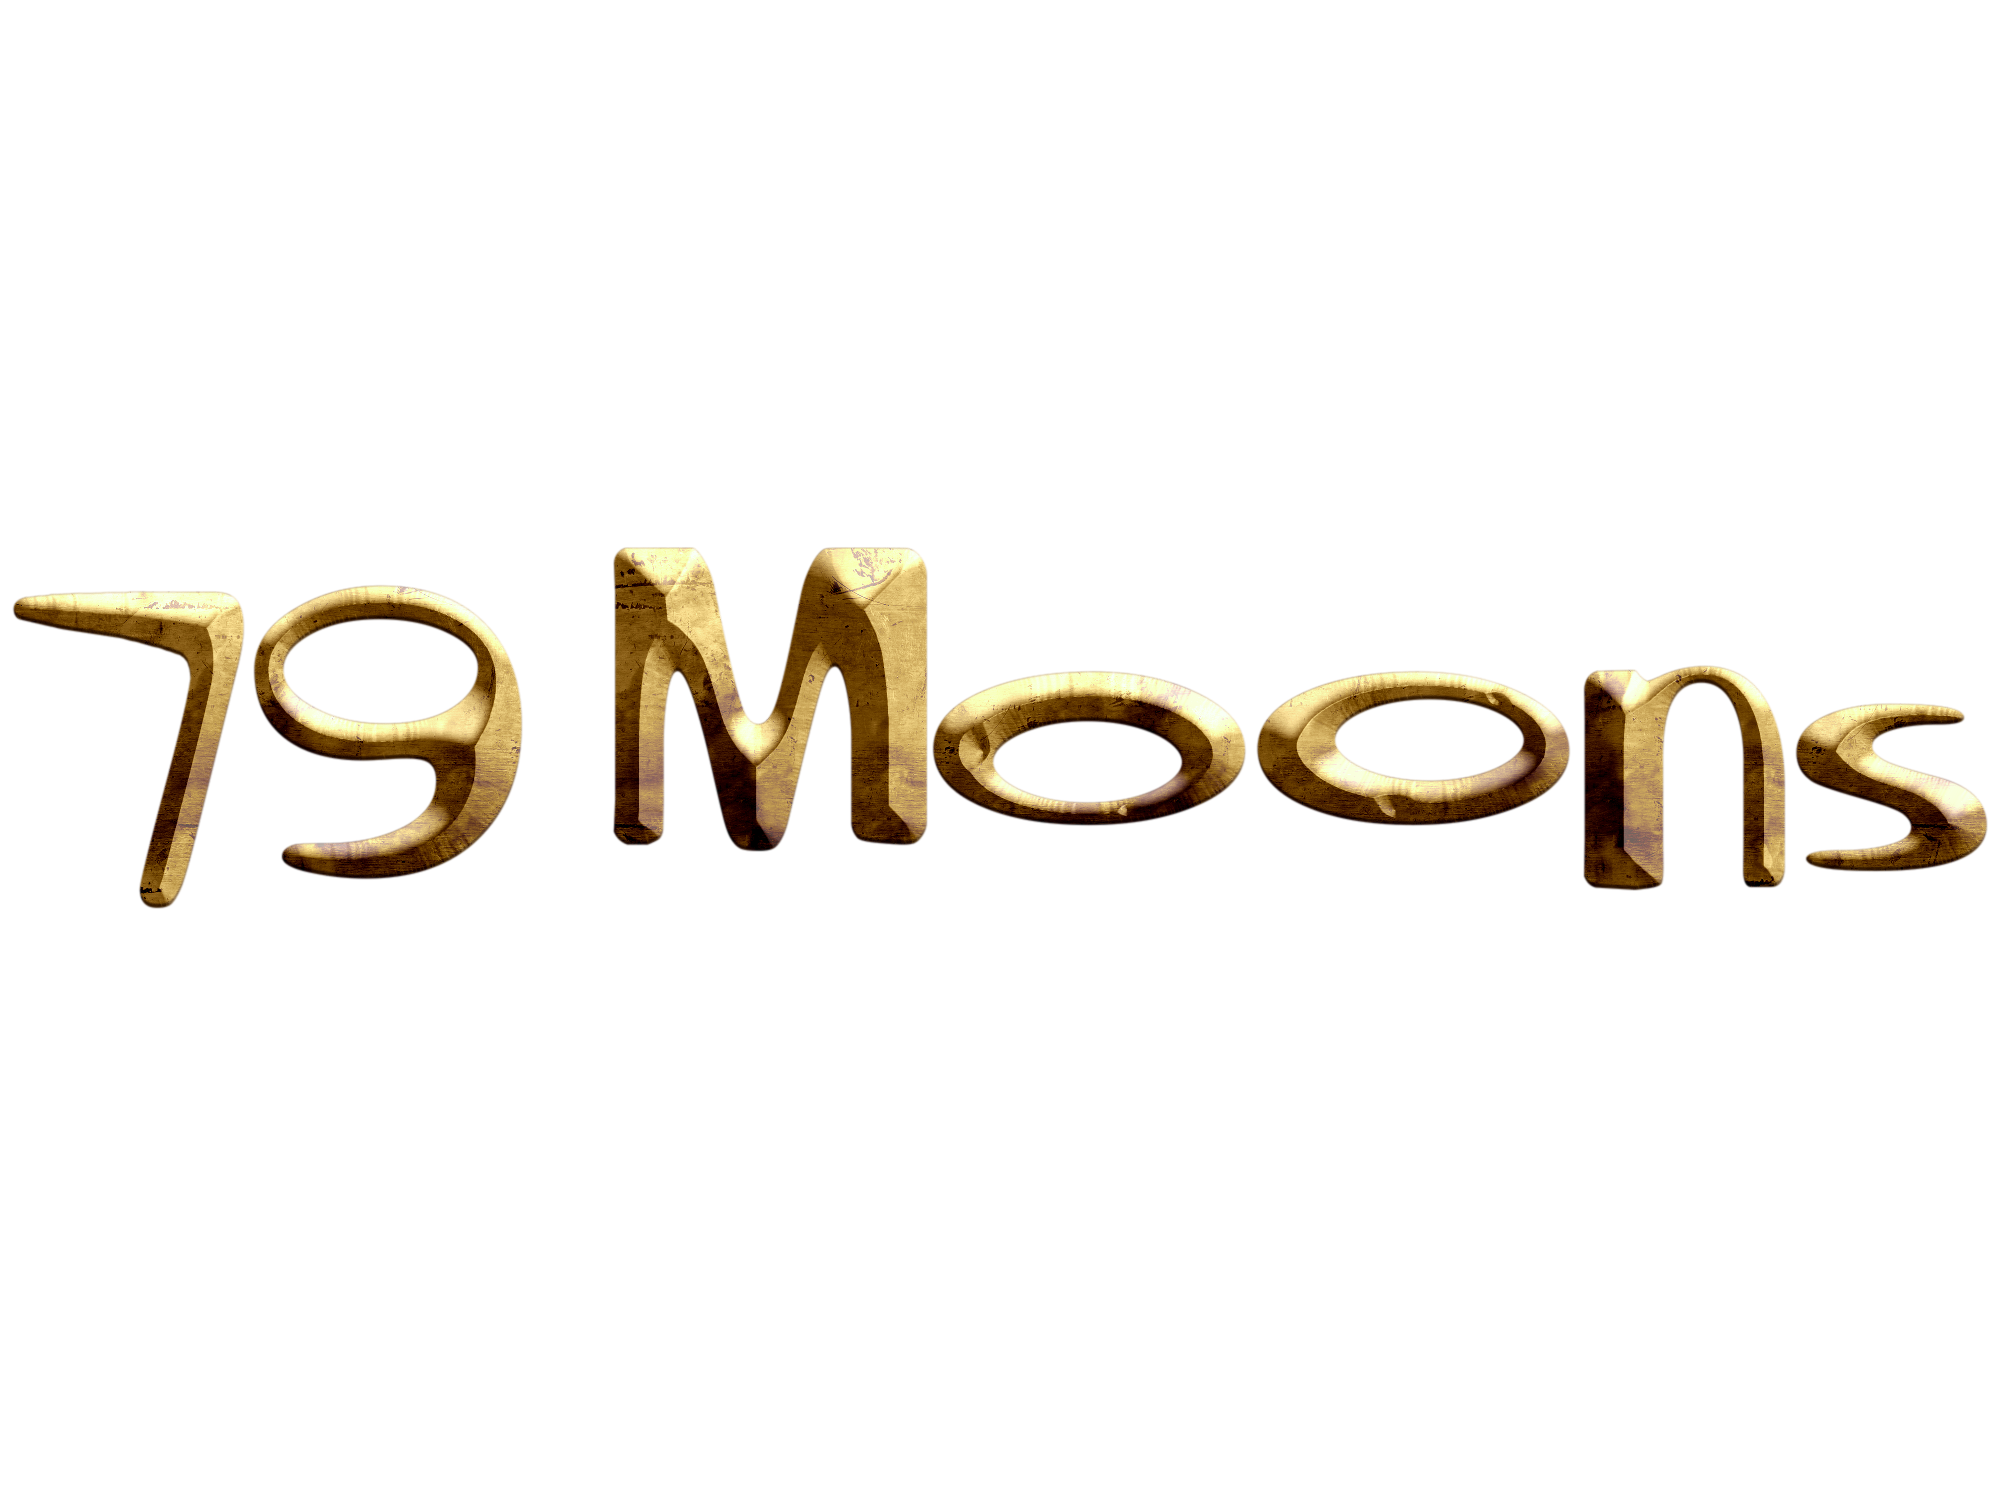 79 Moons